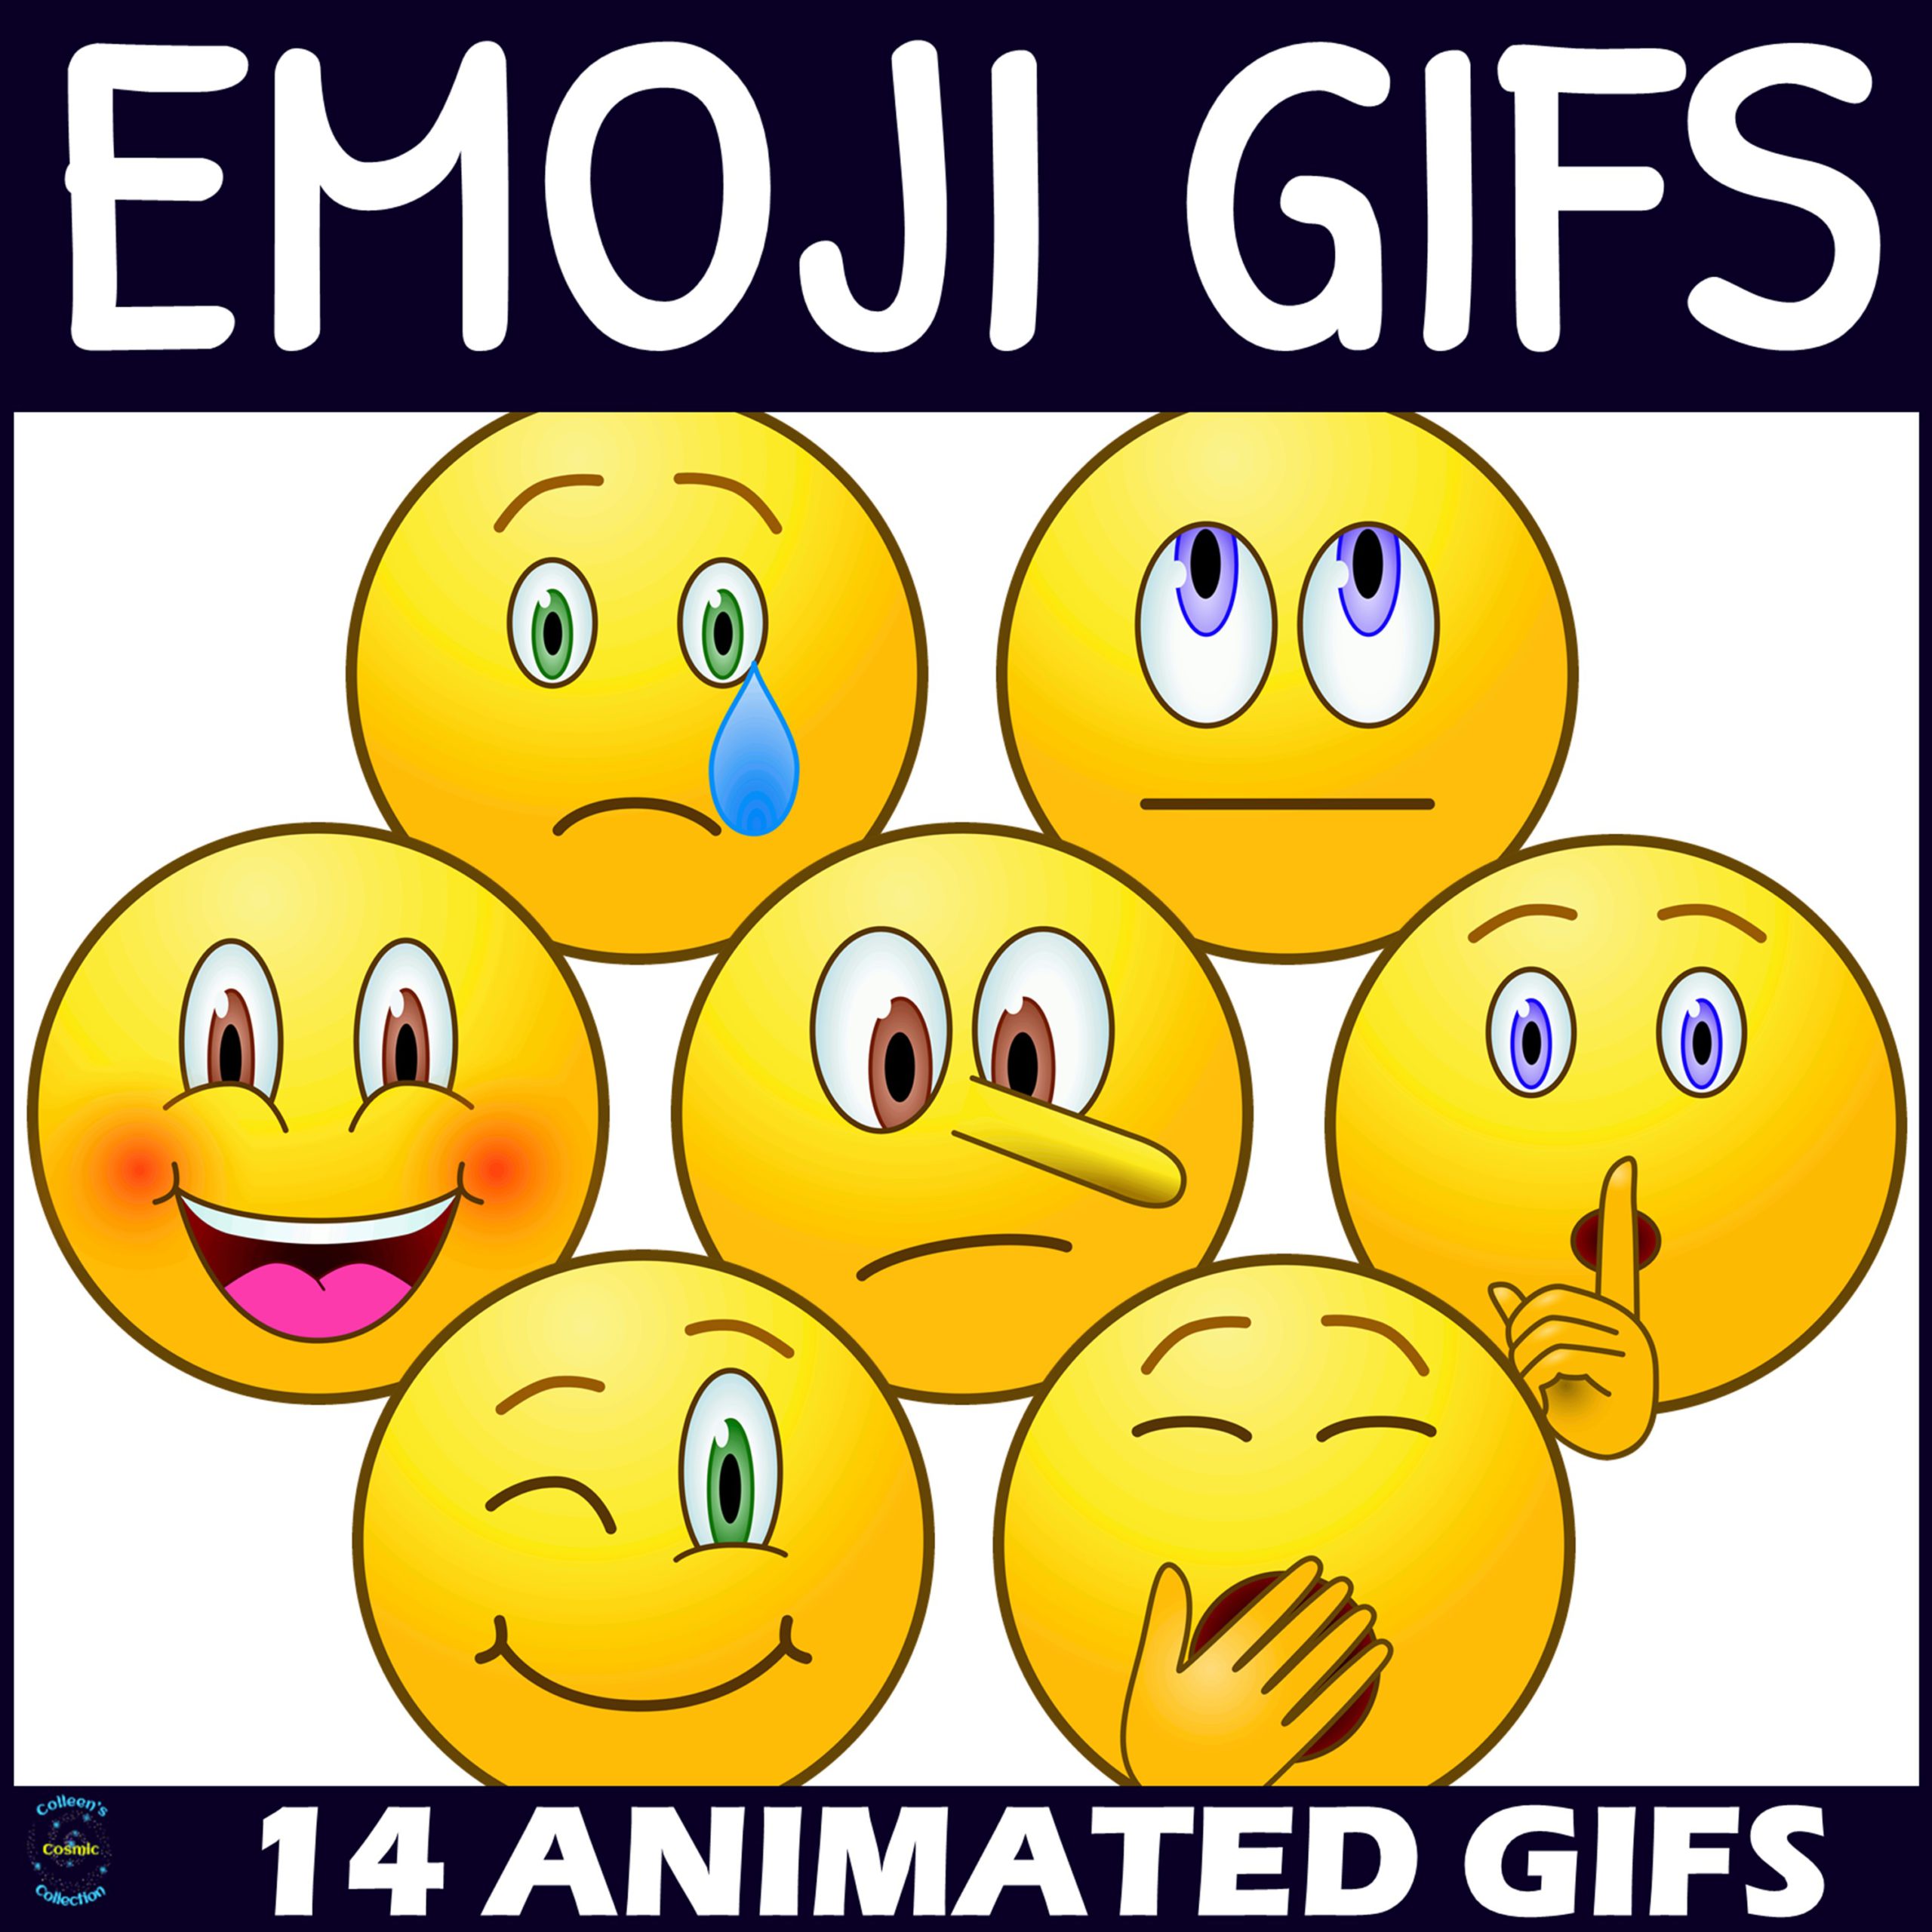 28397 animated emojis clipart 8 1 Teacha